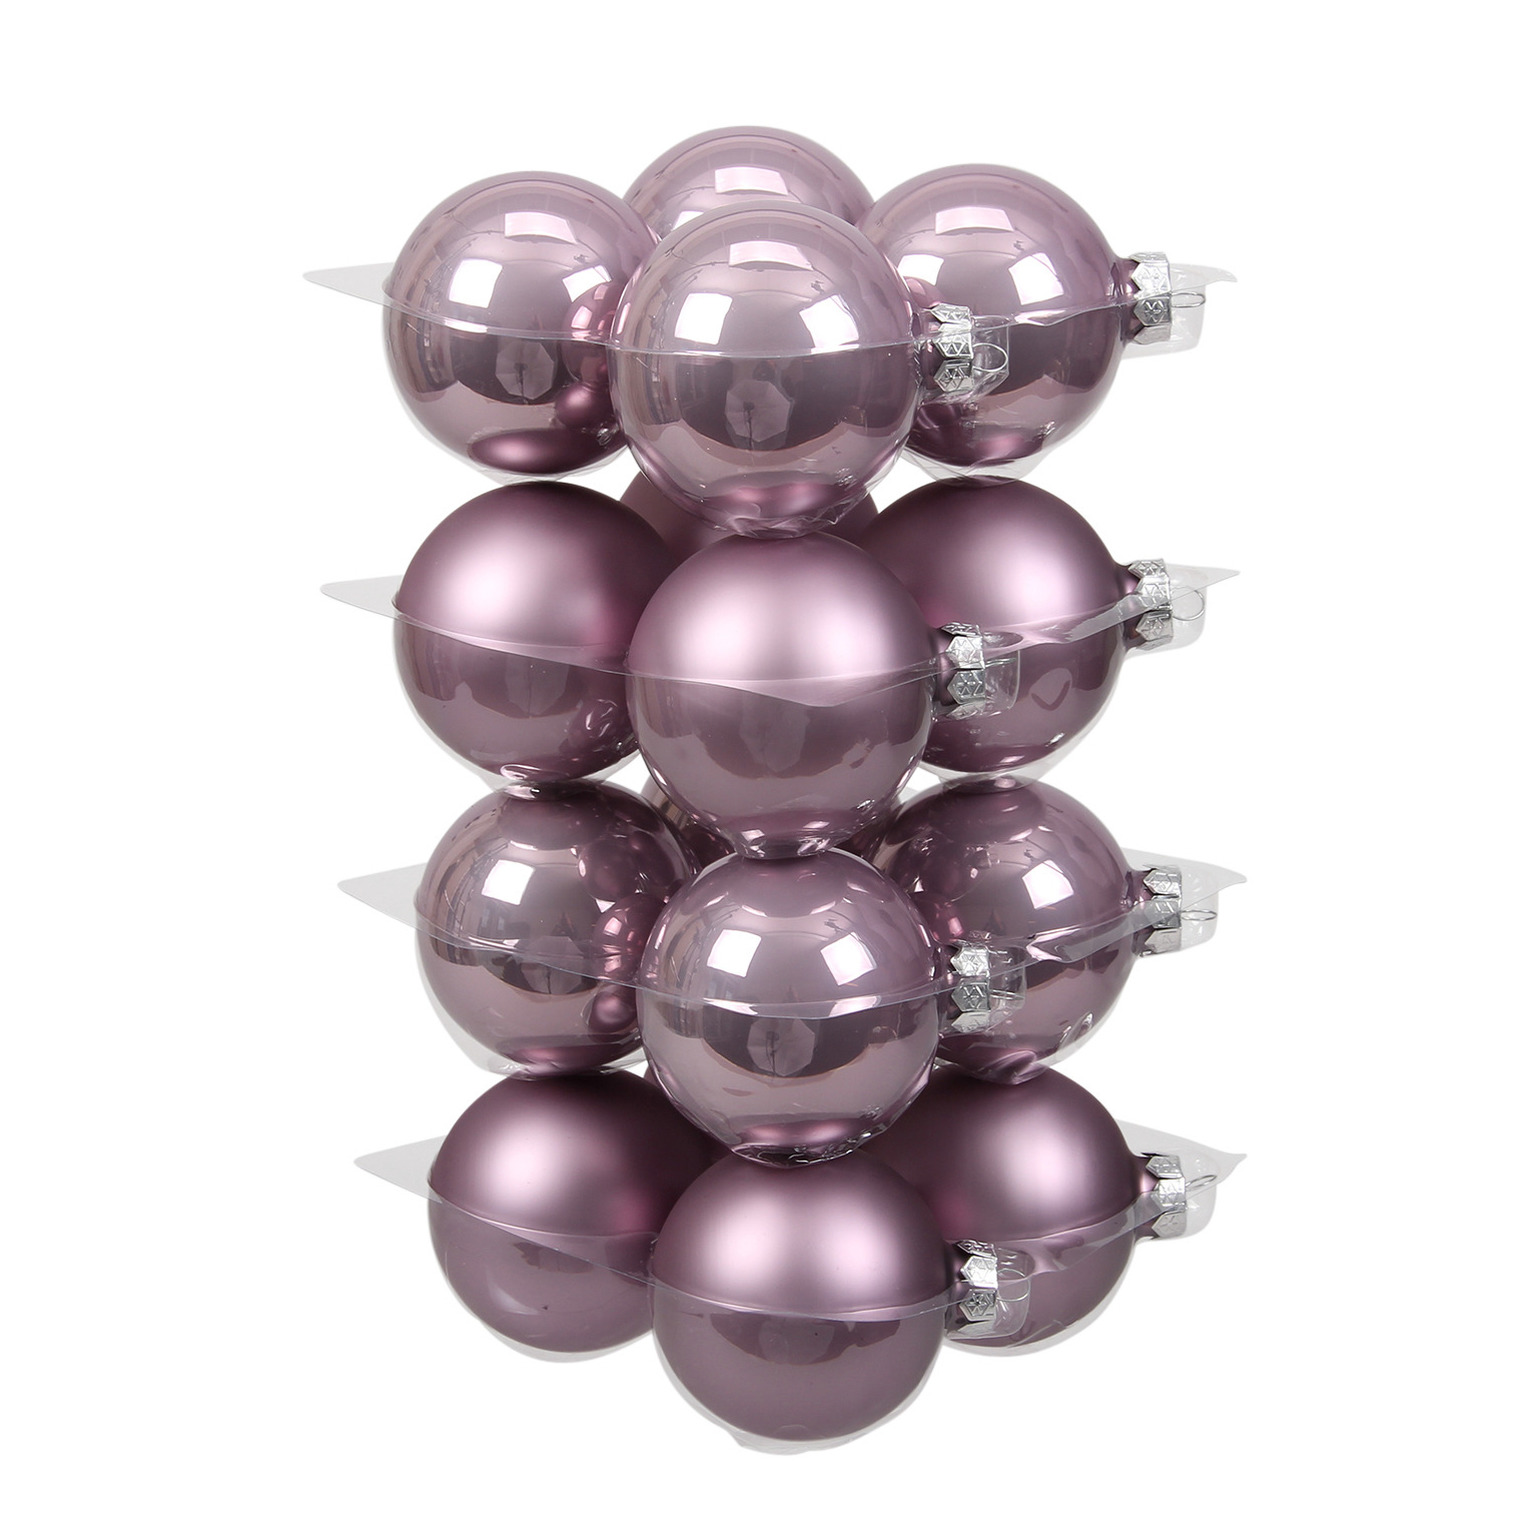 16x stuks glazen kerstballen salie paars (lilac sage) 8 cm mat-glans